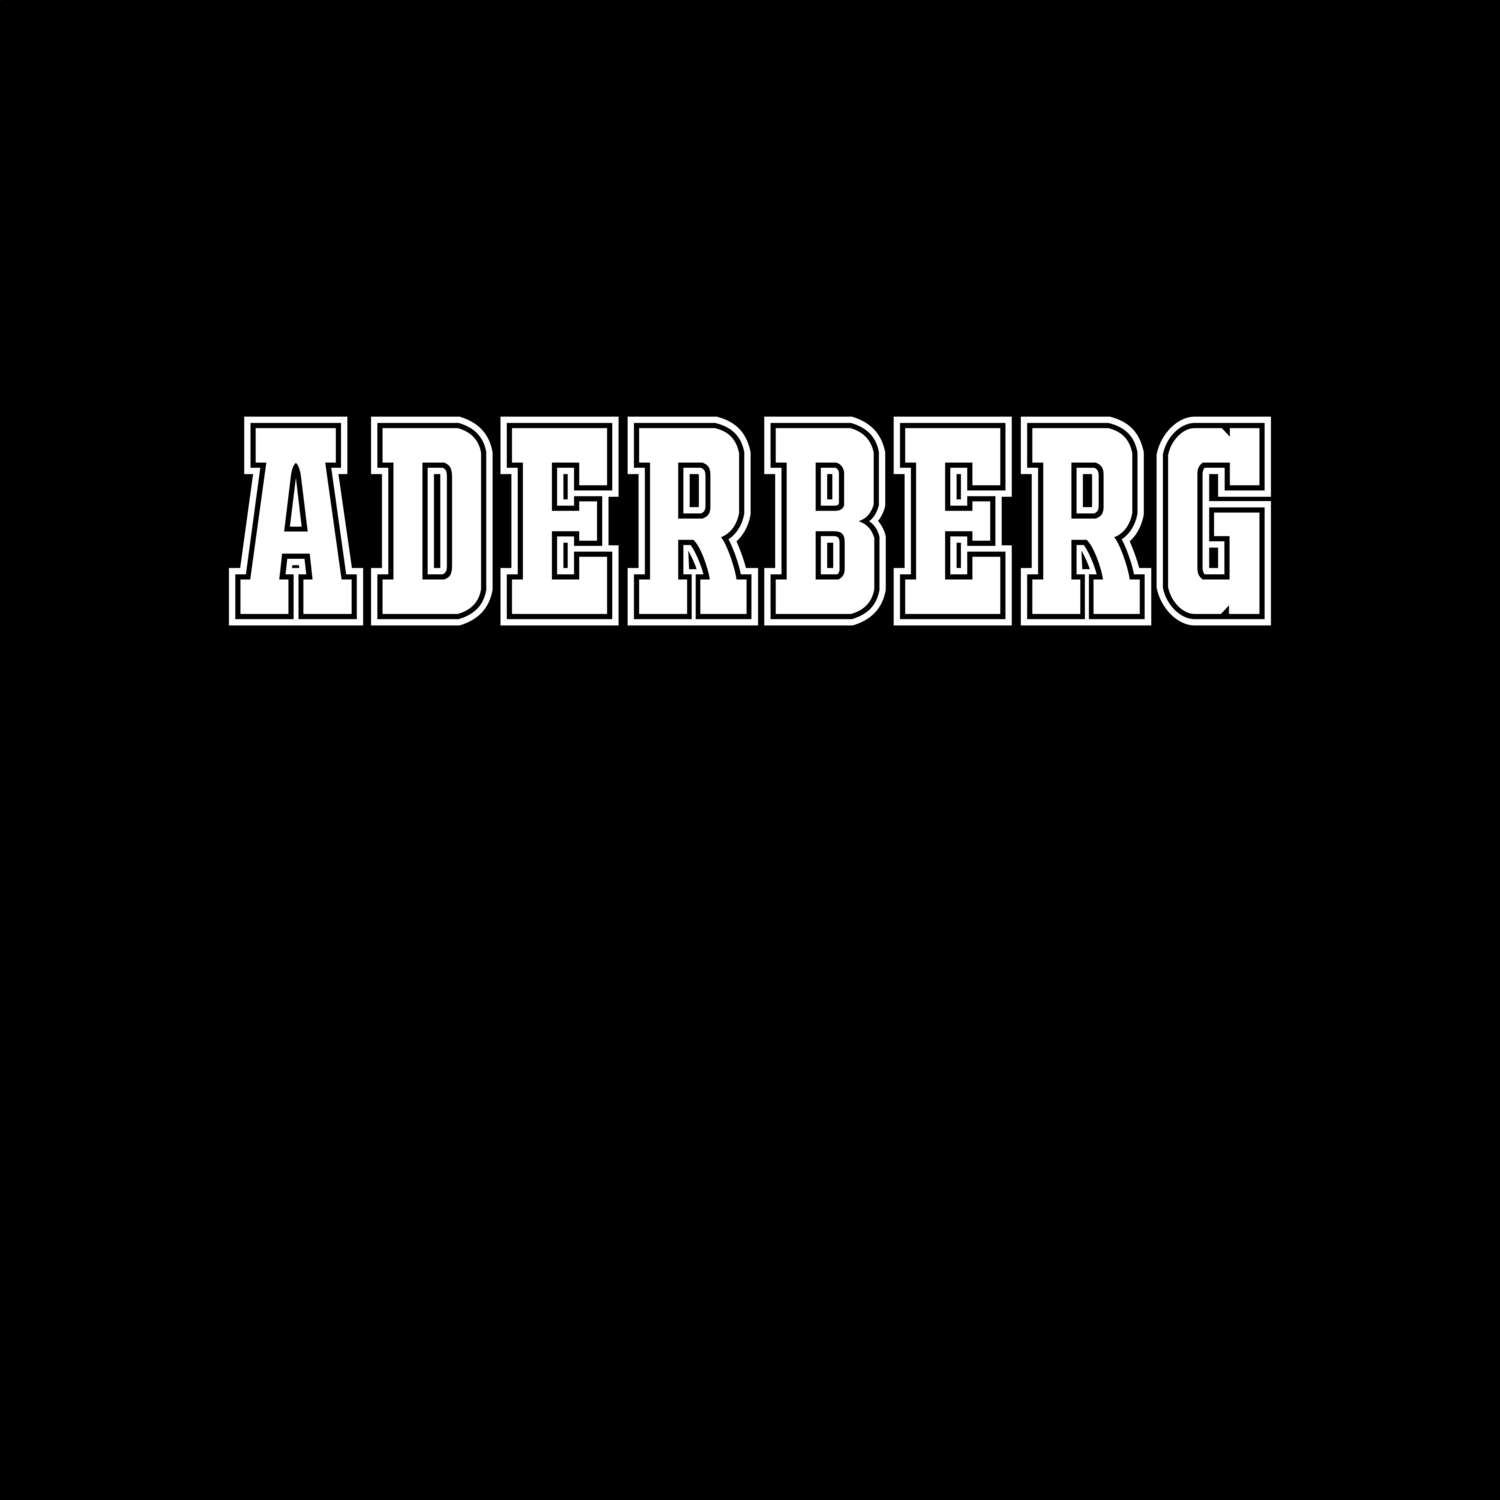 Aderberg T-Shirt »Classic«